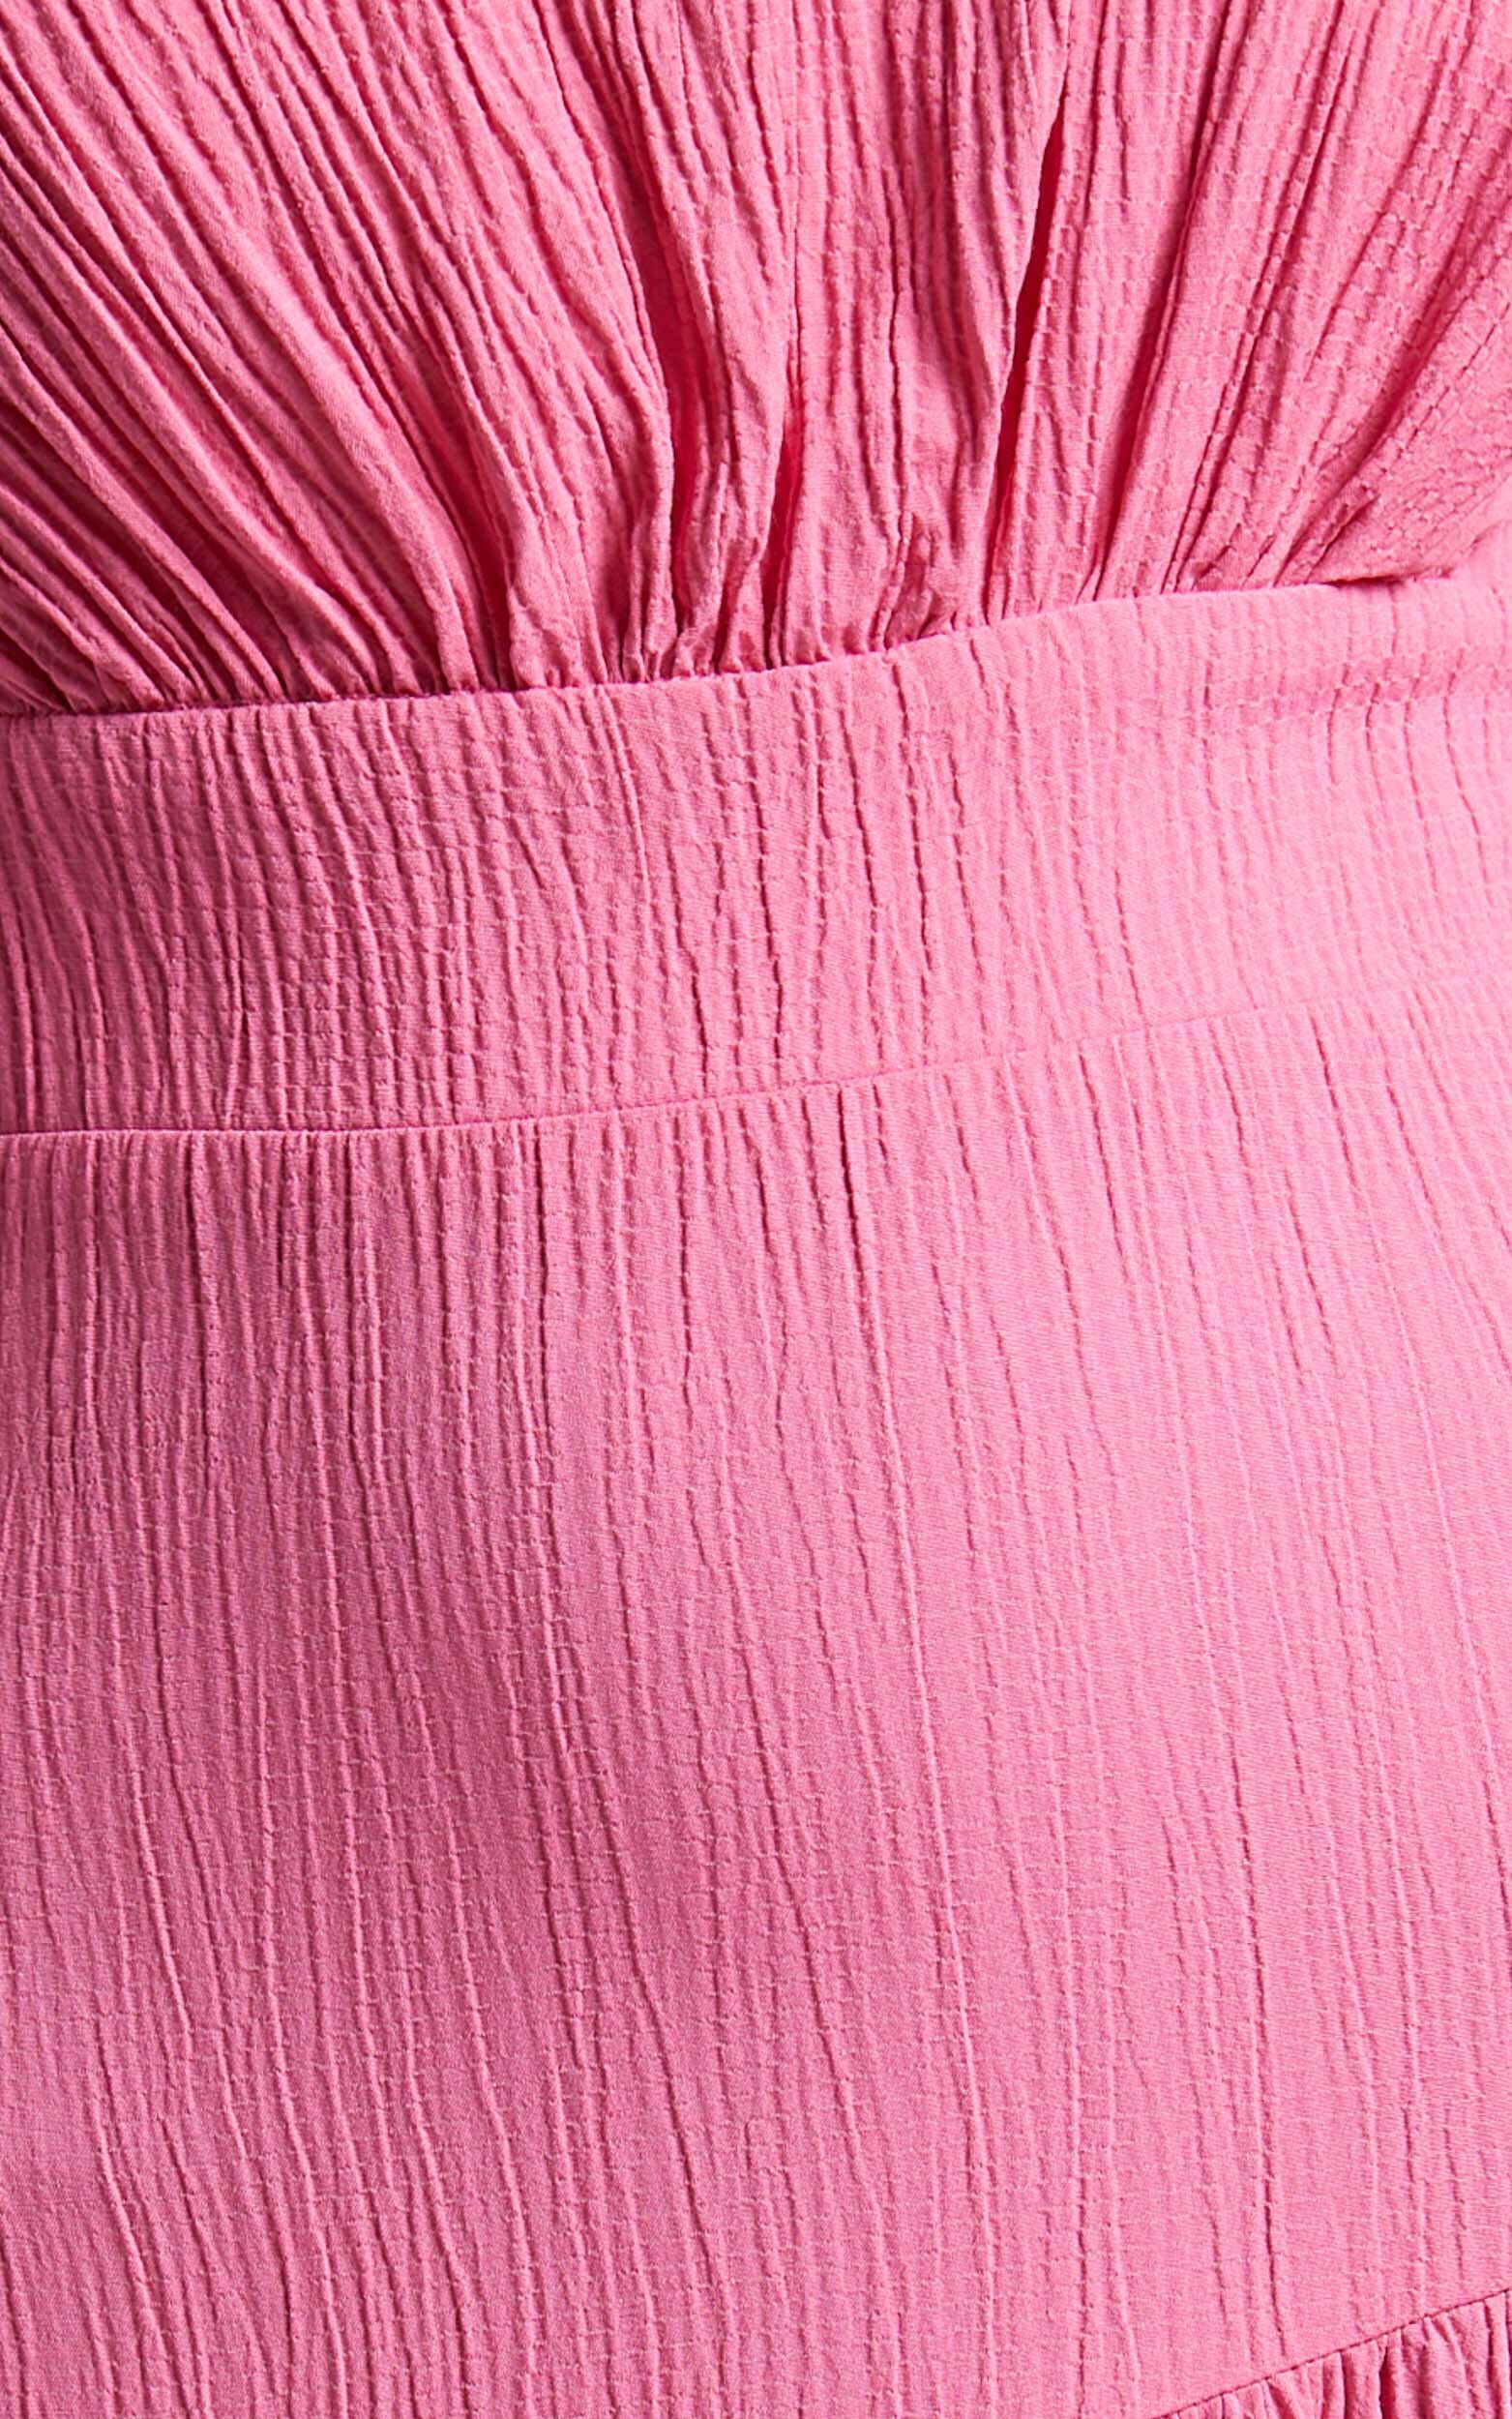 Celestia Midi Dress - Tiered One Shoulder Dress in Bright Pink | Showpo EU